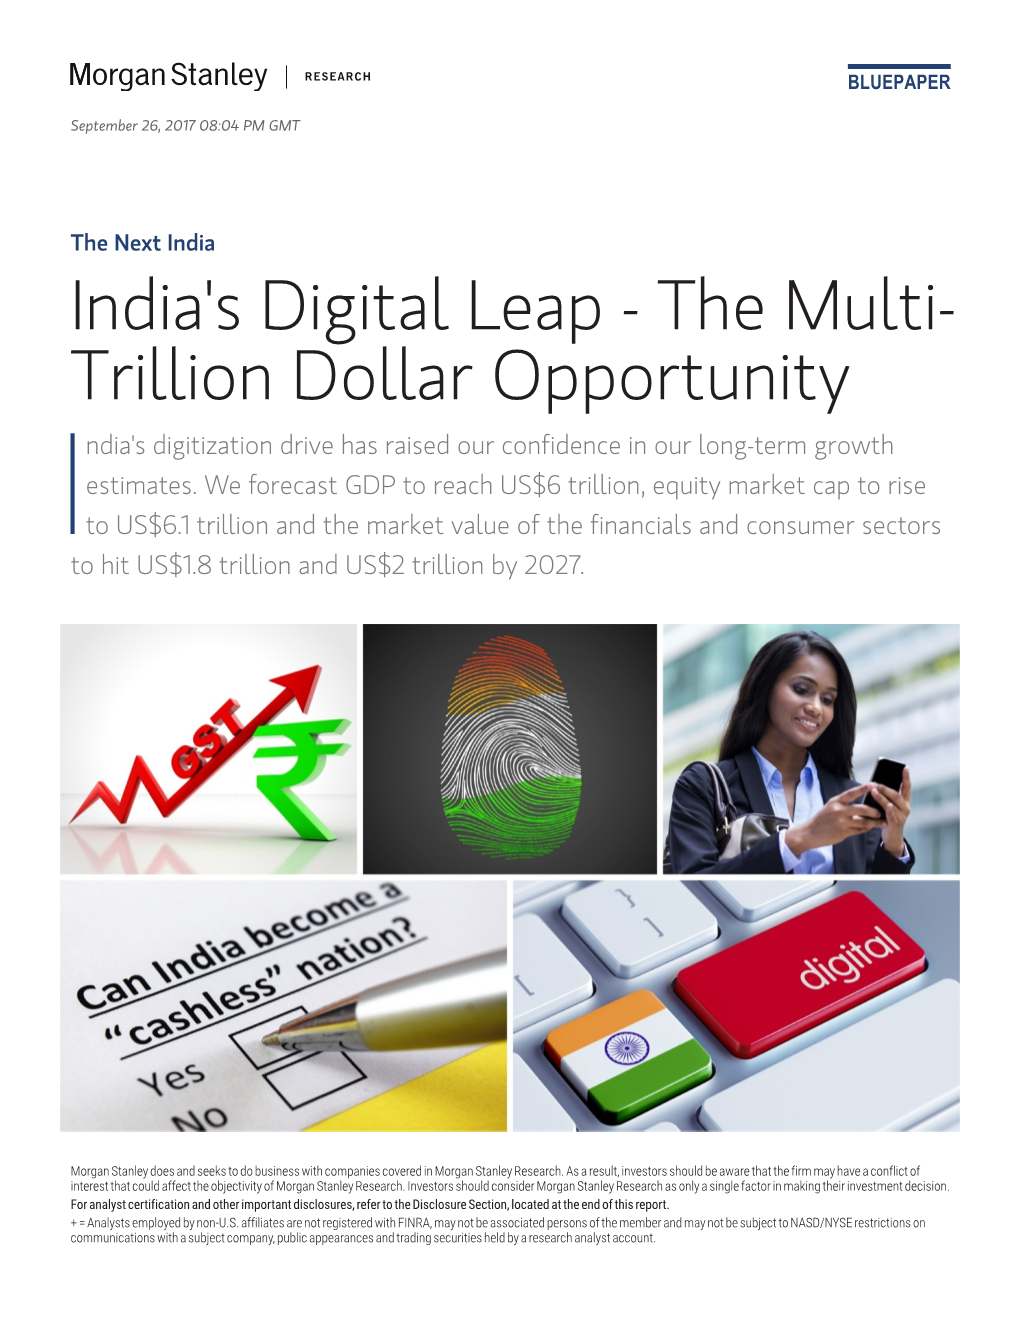 India's Digital Leap: the Multi-Trillion Dollar